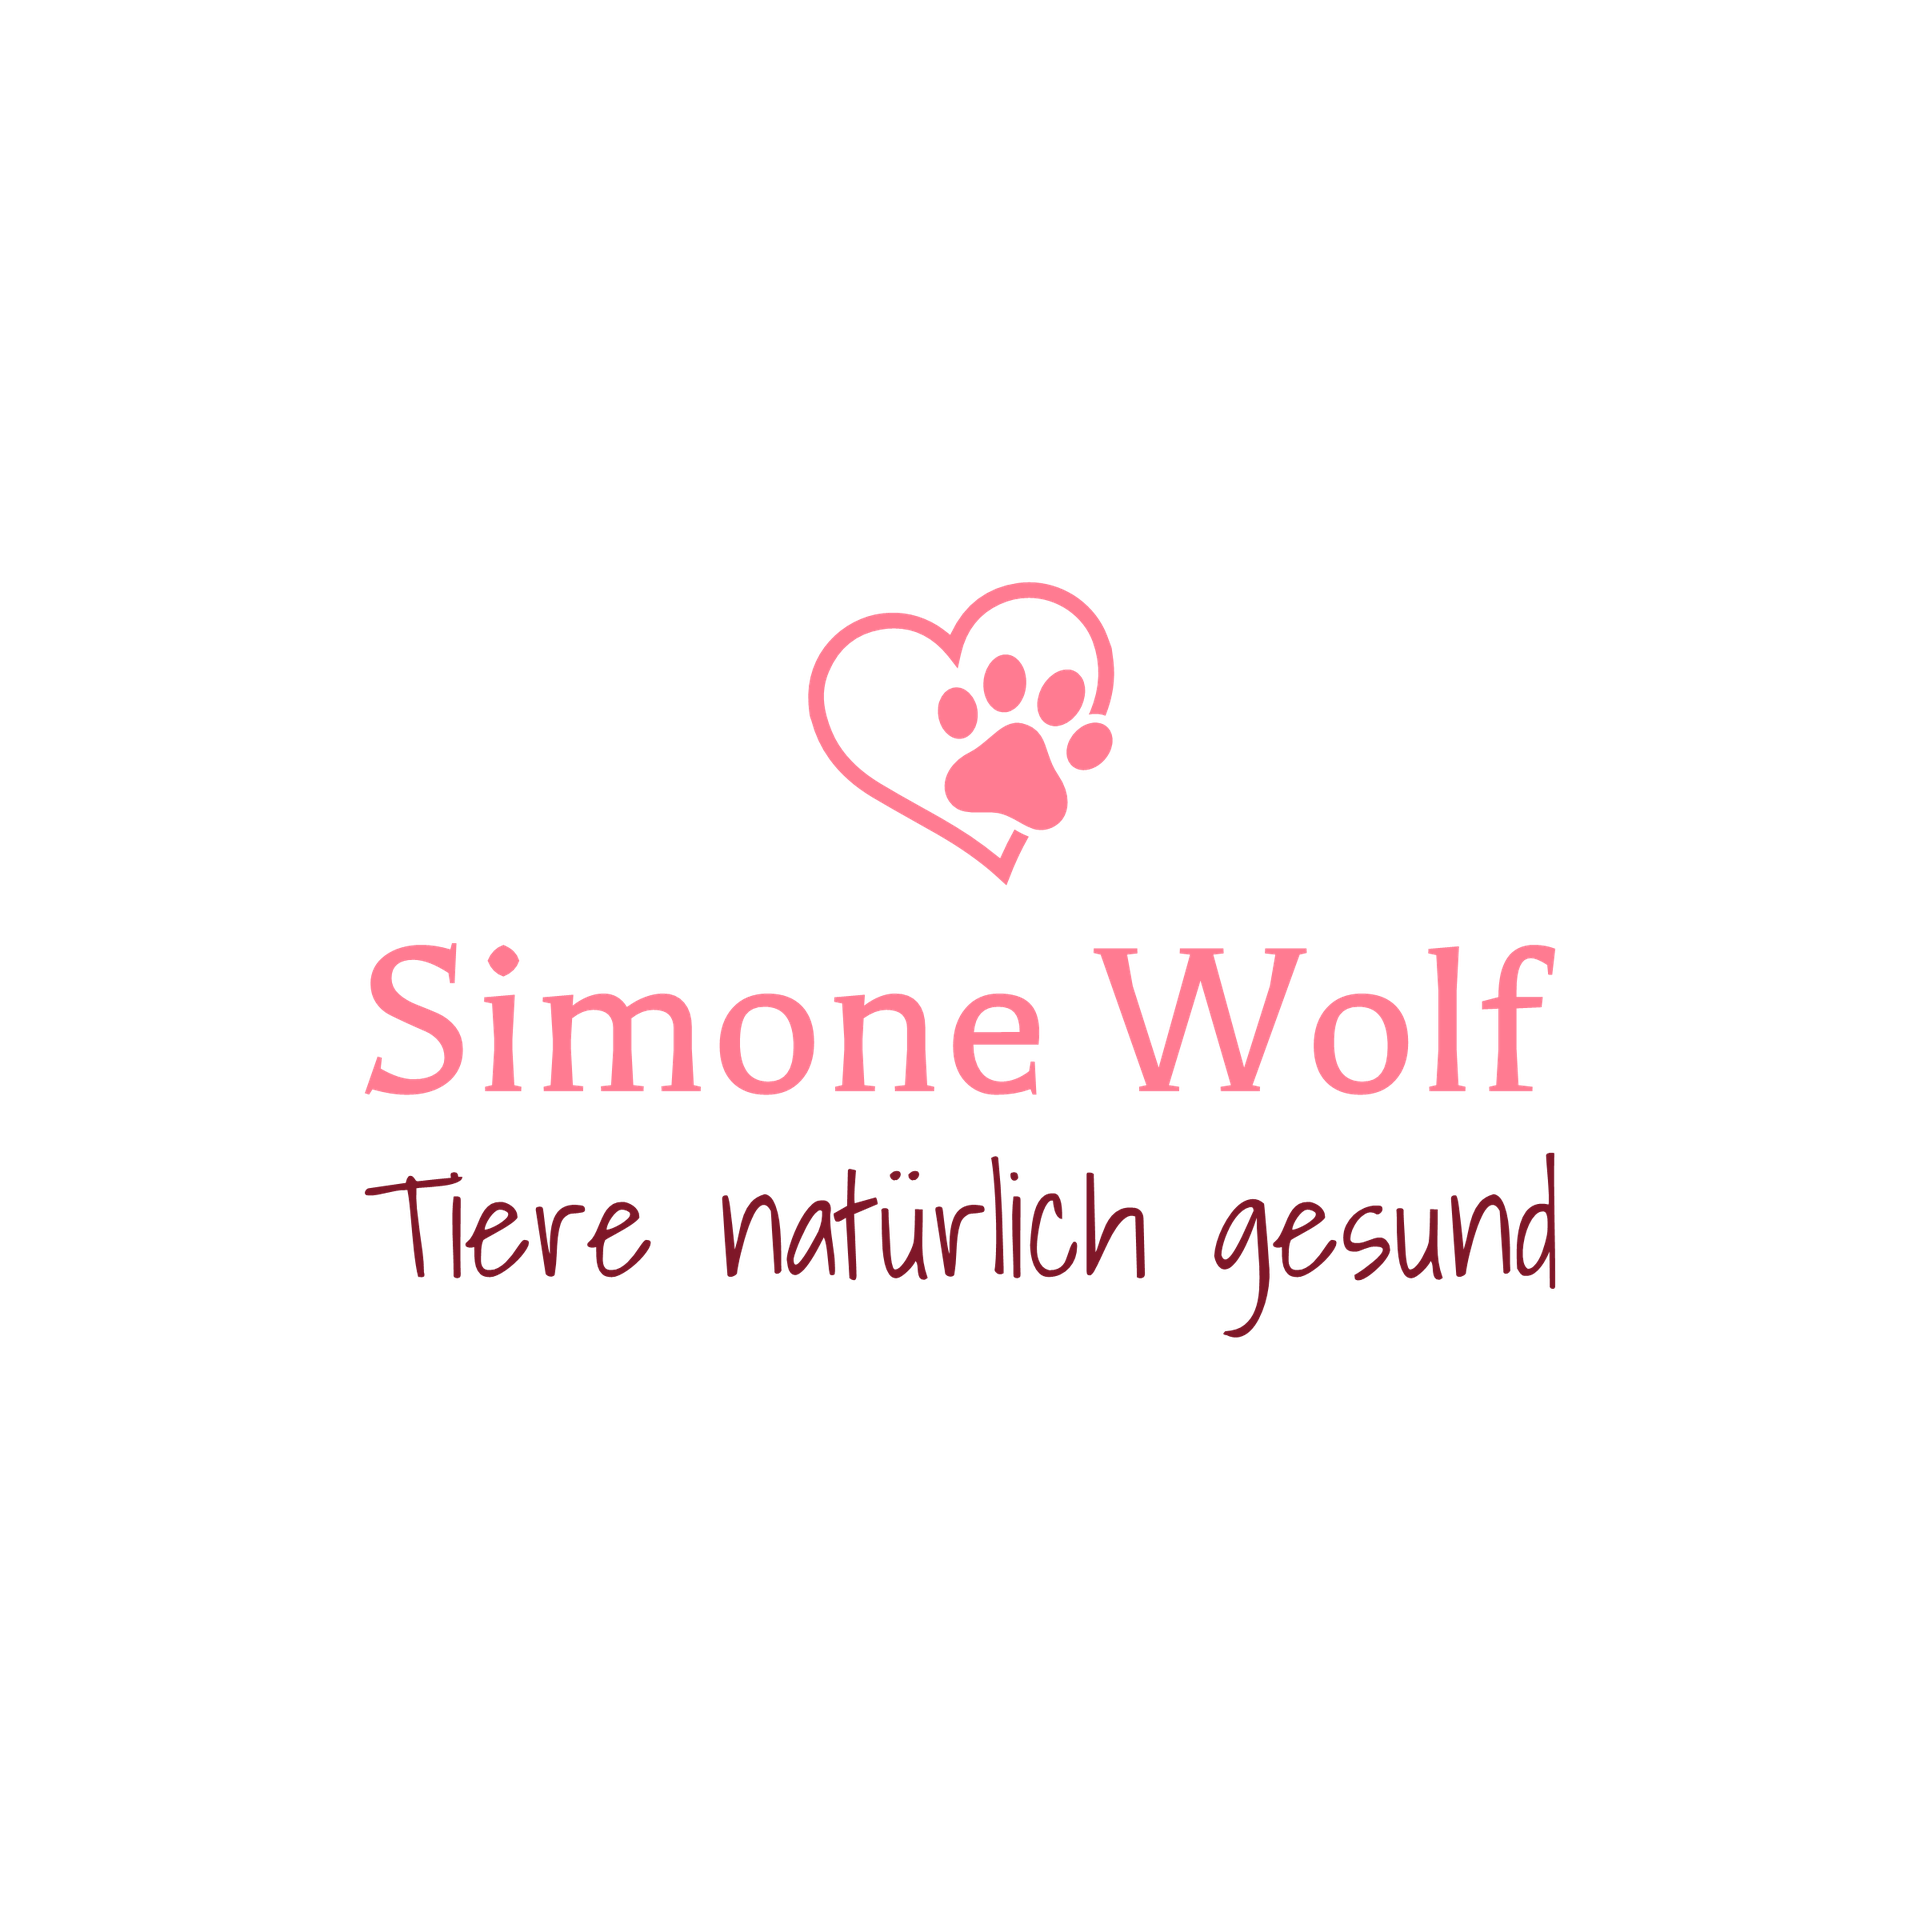 (c) Simone-wolf.de